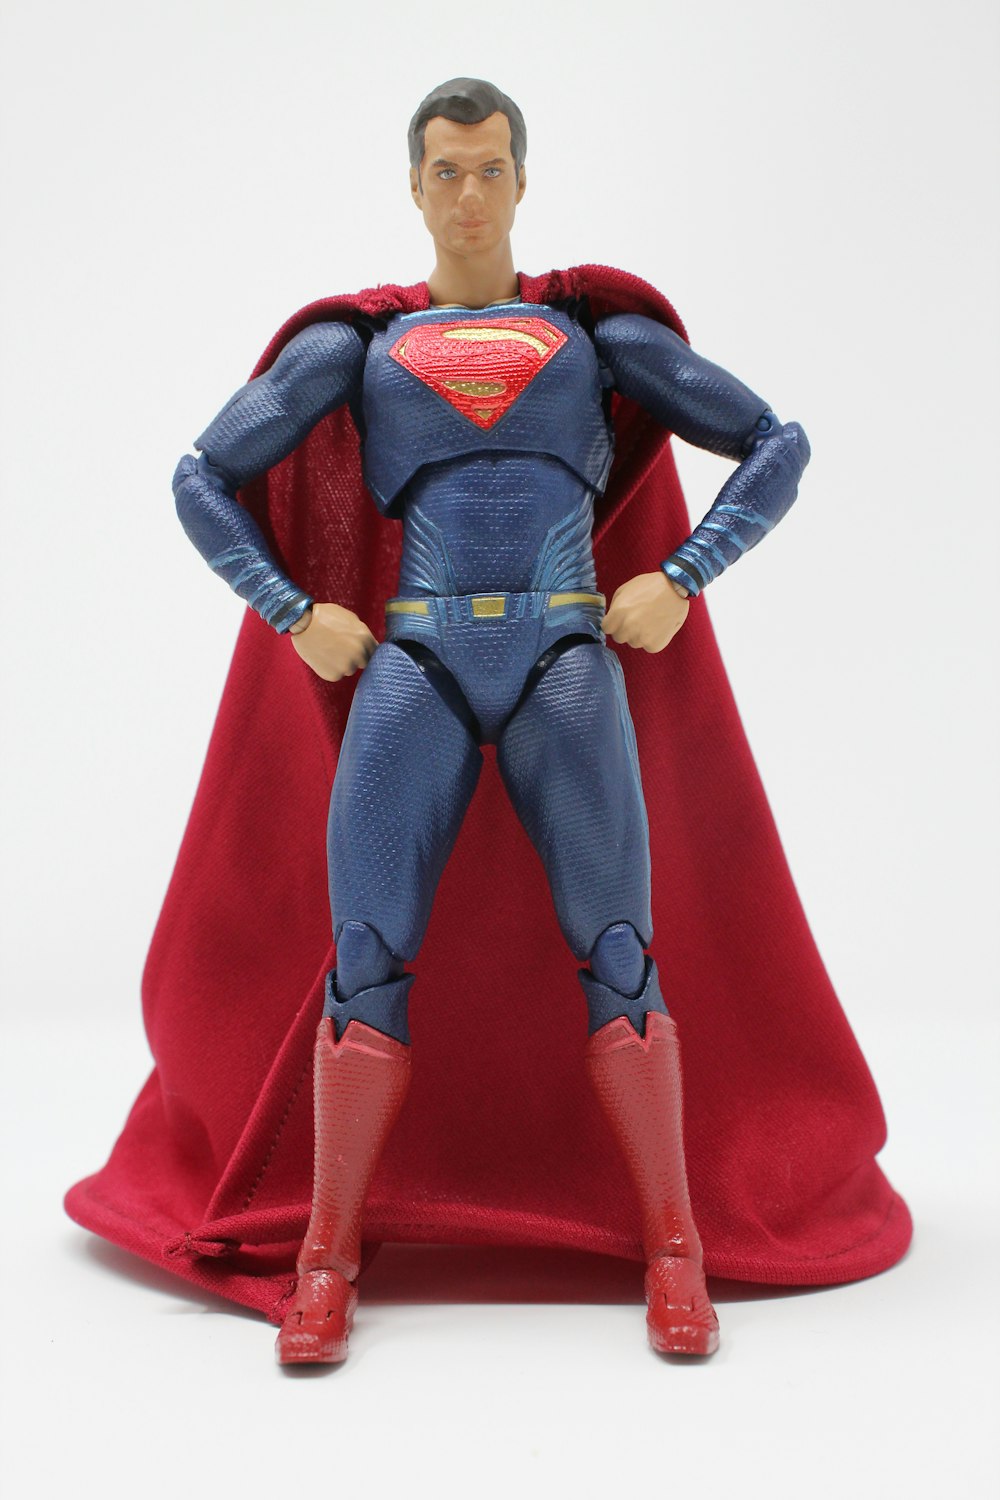 Super Man Pictures | Download Free Images on Unsplash